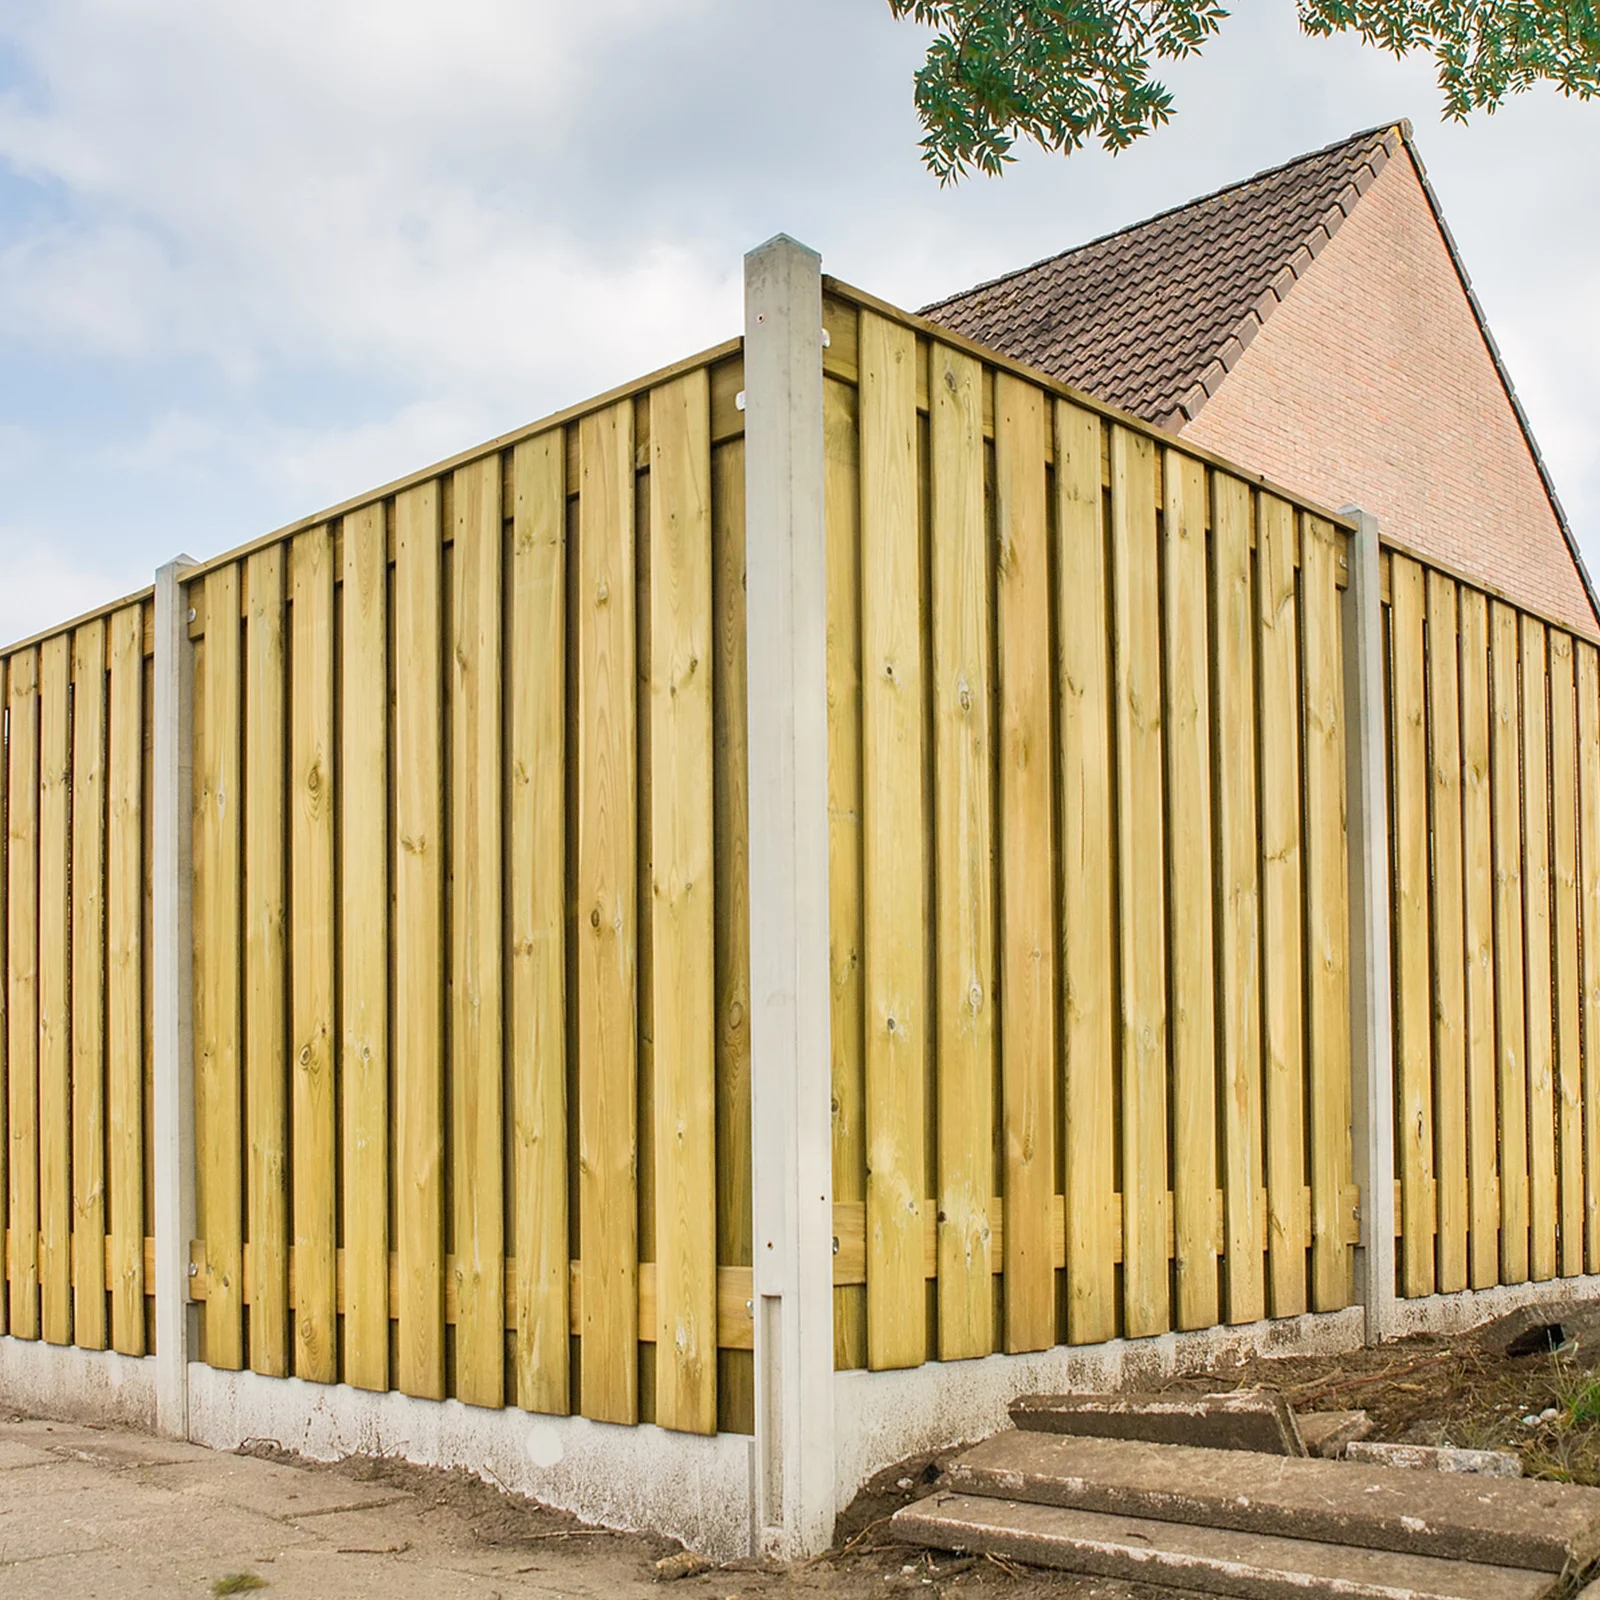 A pressure-treated wood fence